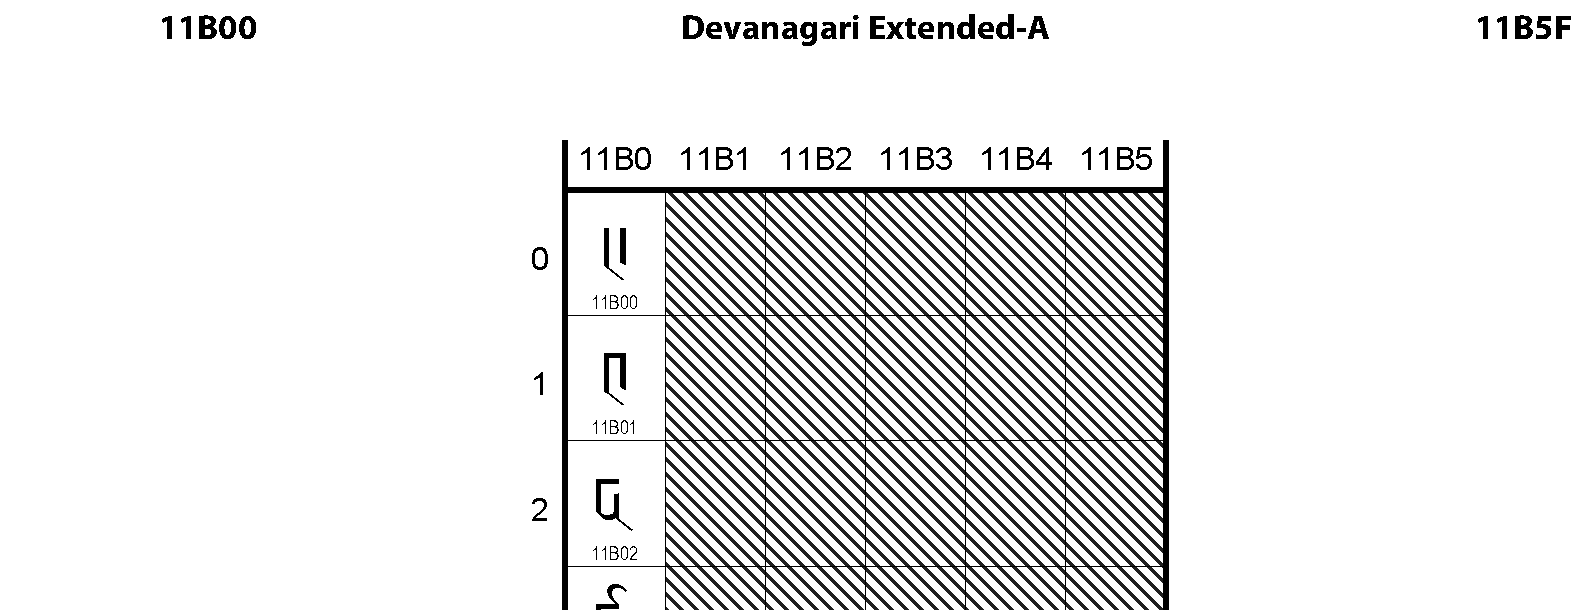 Unicode - Devanagari Extended-A